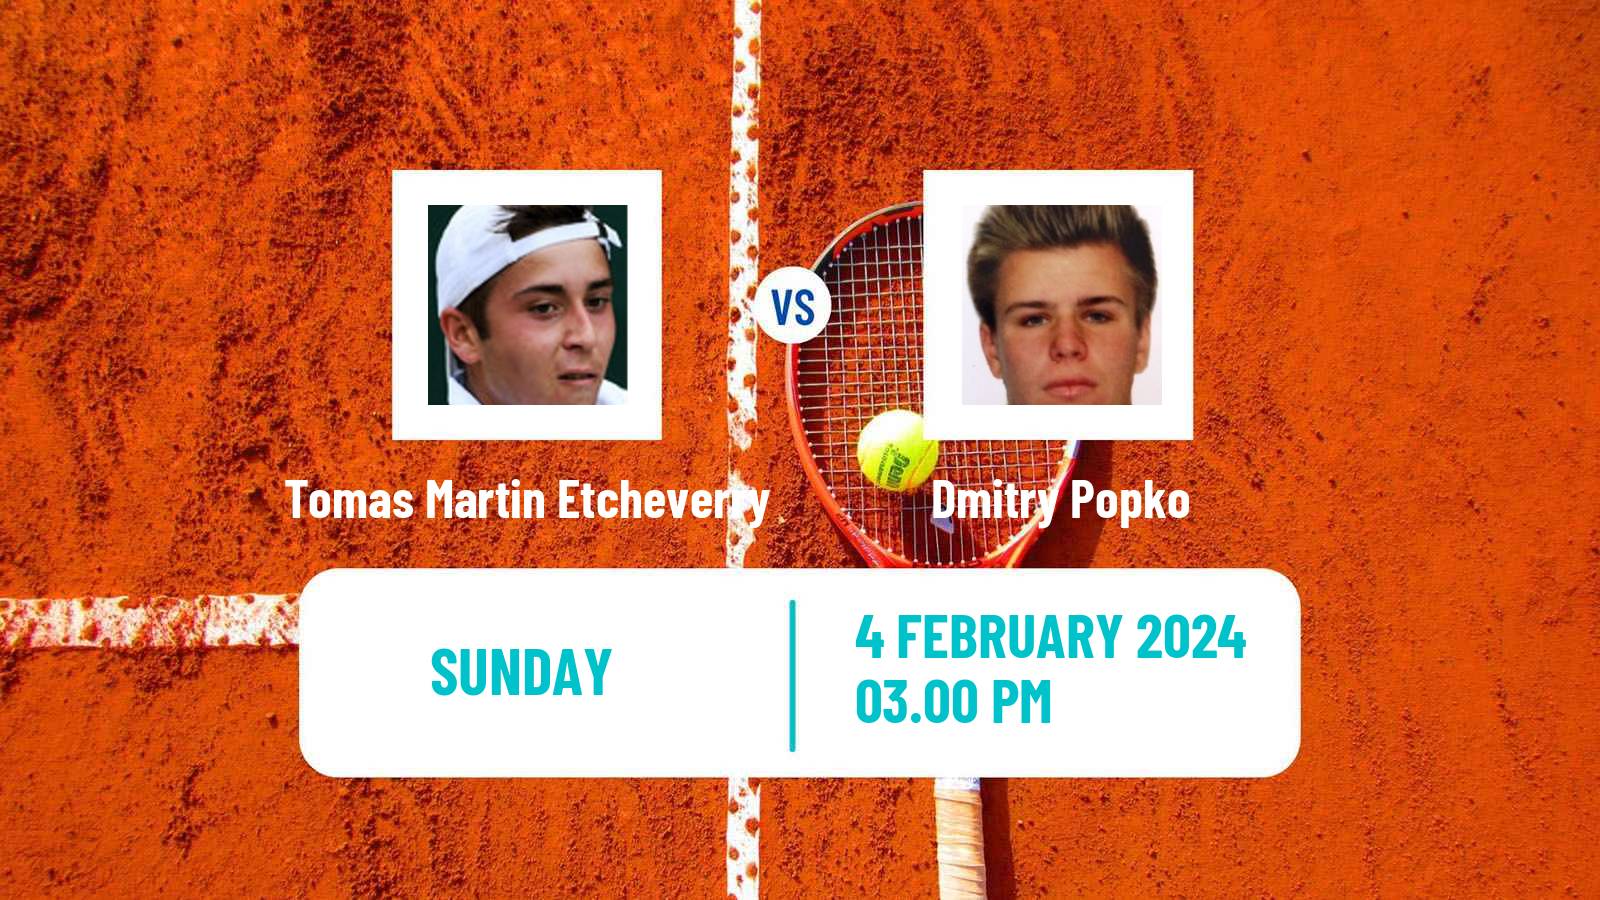 Tennis Davis Cup World Group Tomas Martin Etcheverry - Dmitry Popko